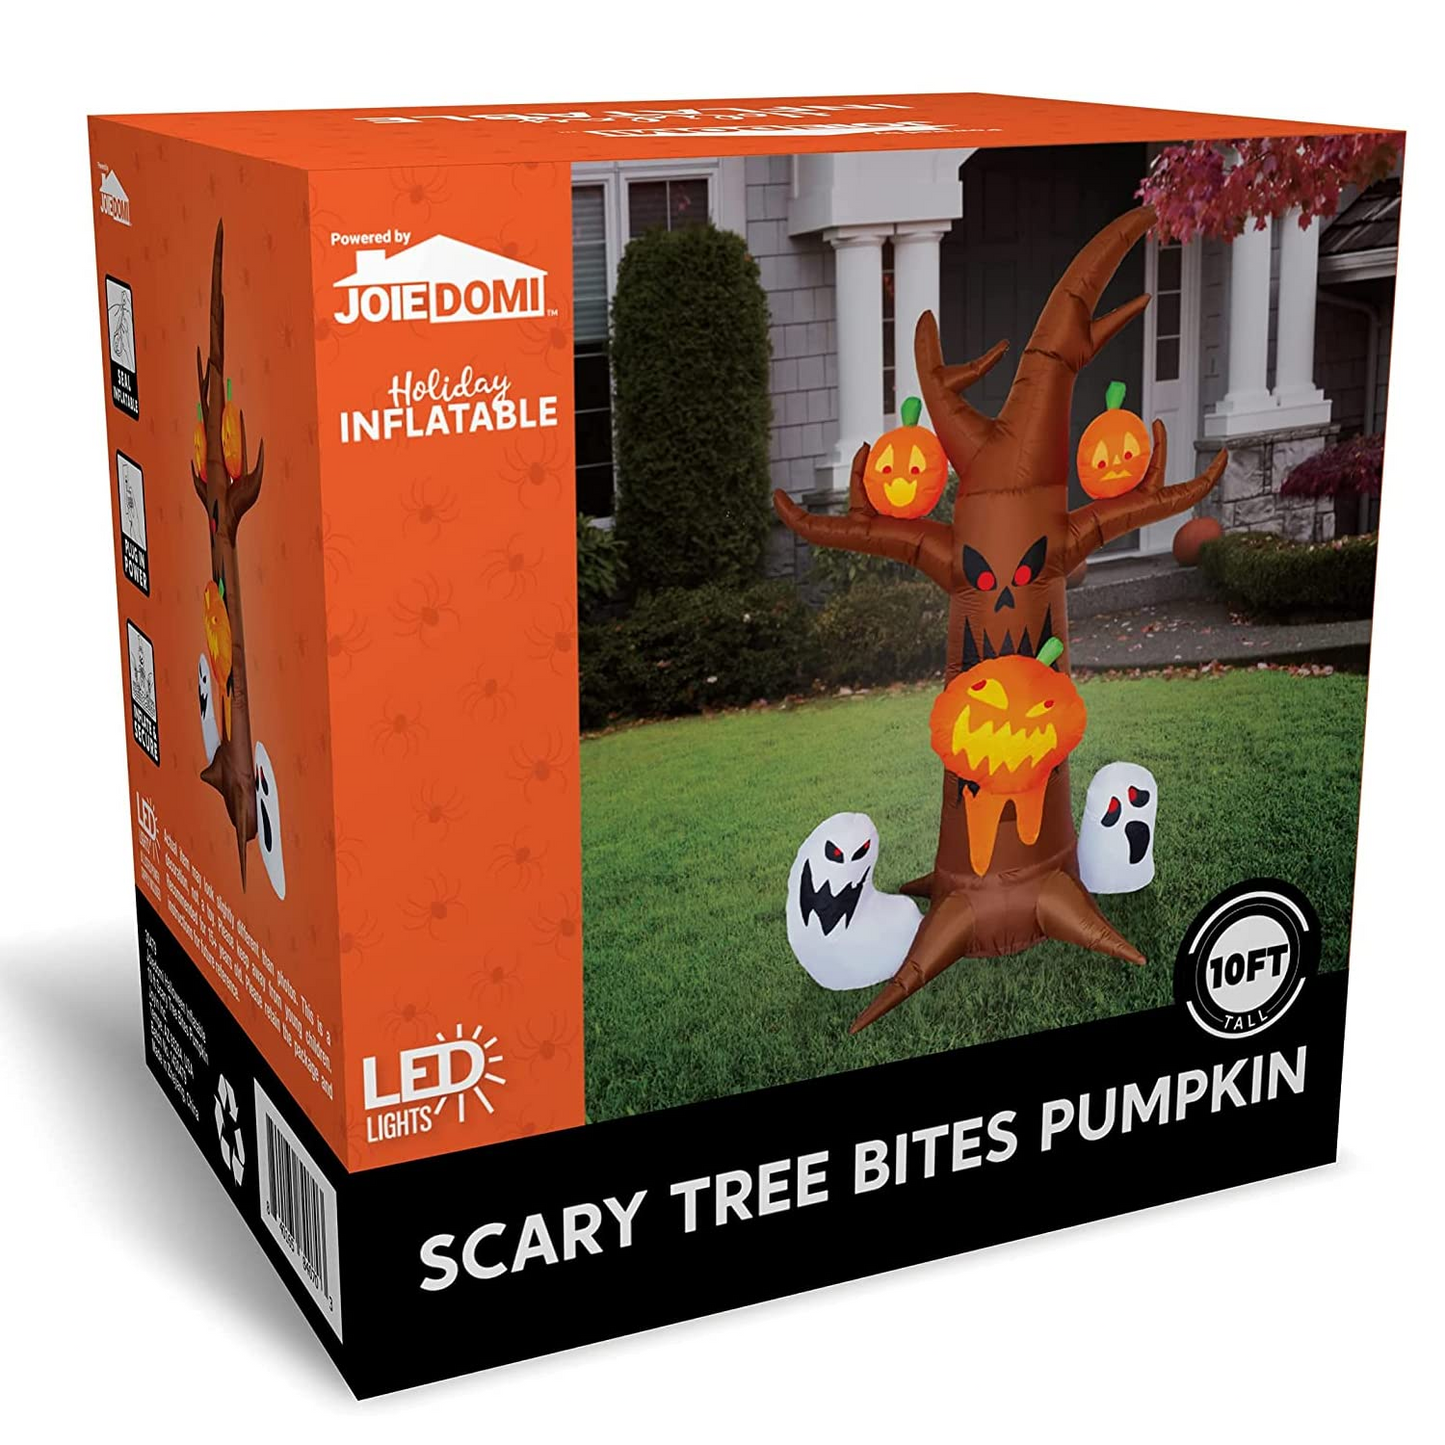 10ft Scary Tree Bites Pumpkin